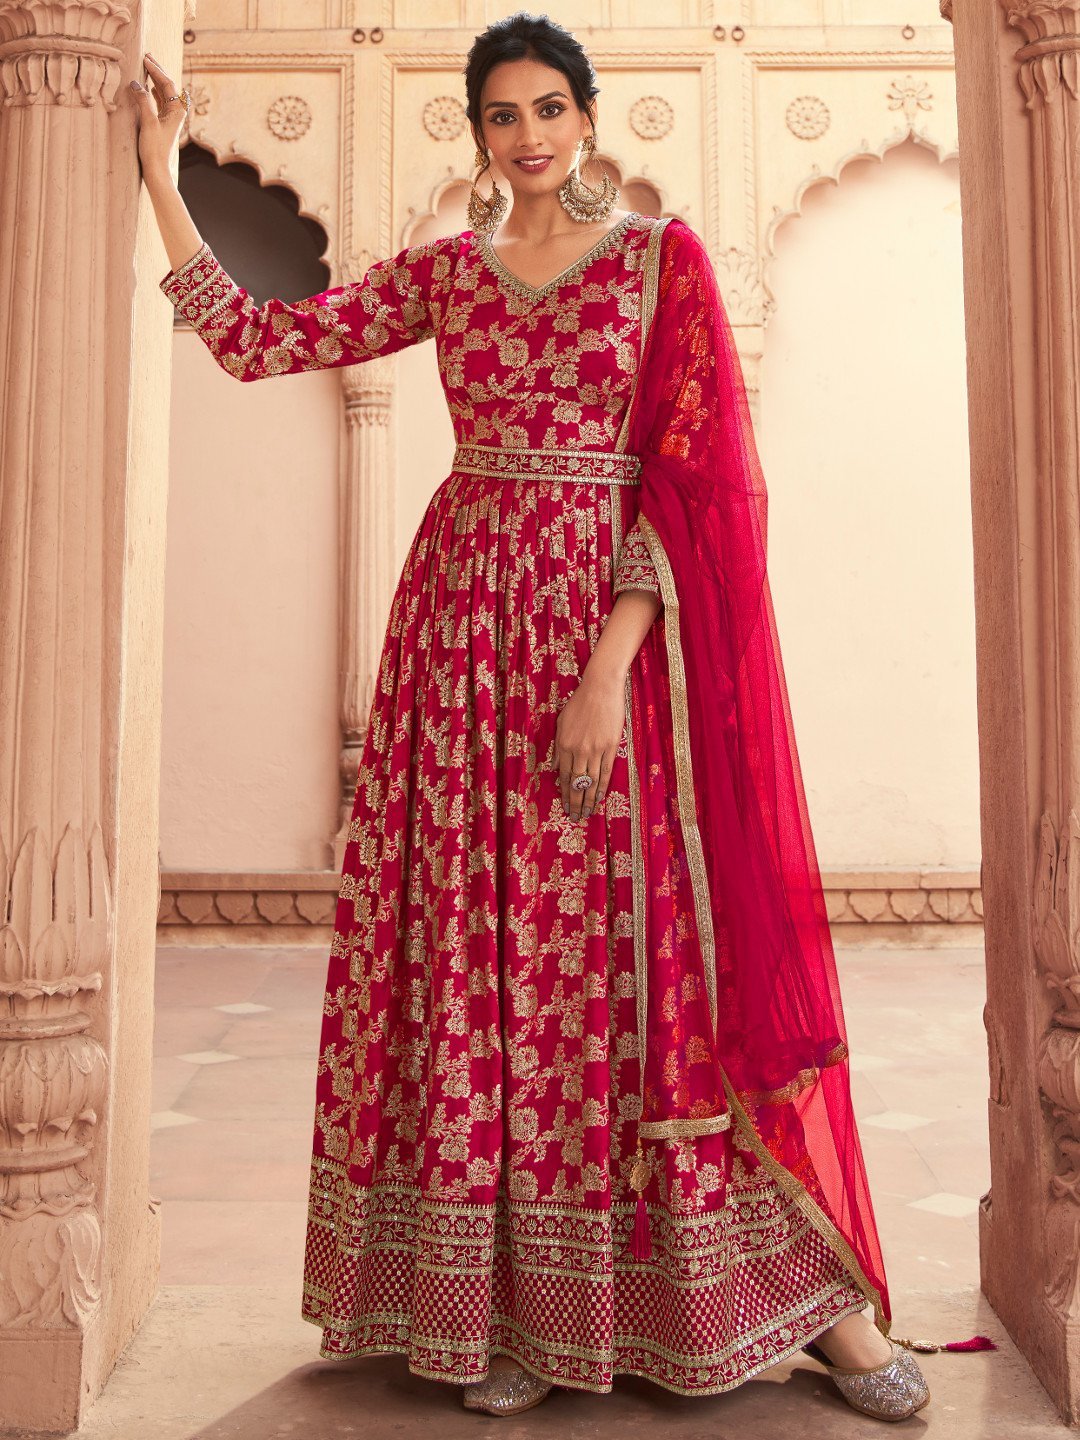 Stunning Dola Jacquard LTR - Indian Dress House 786